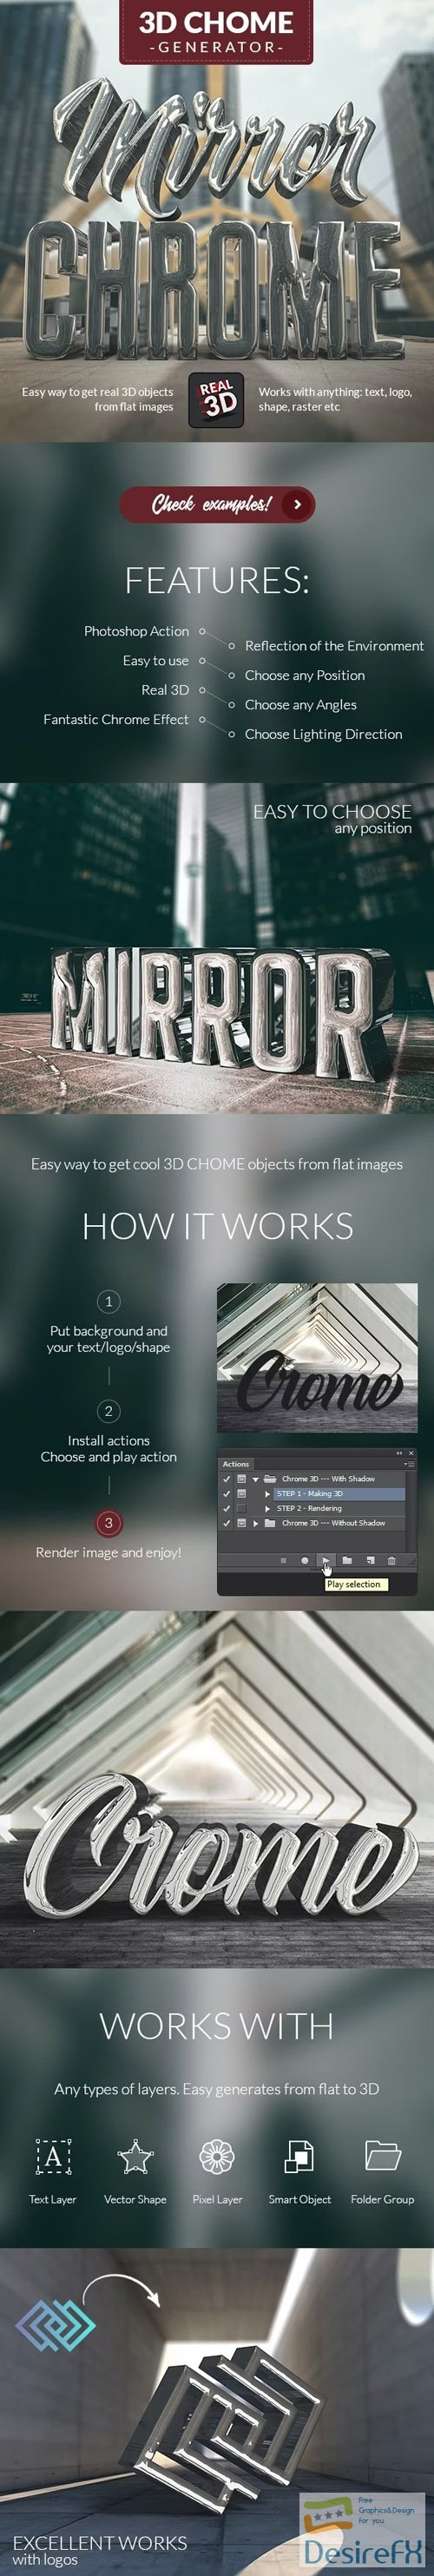 3D Chrome Generator - Photoshop Action